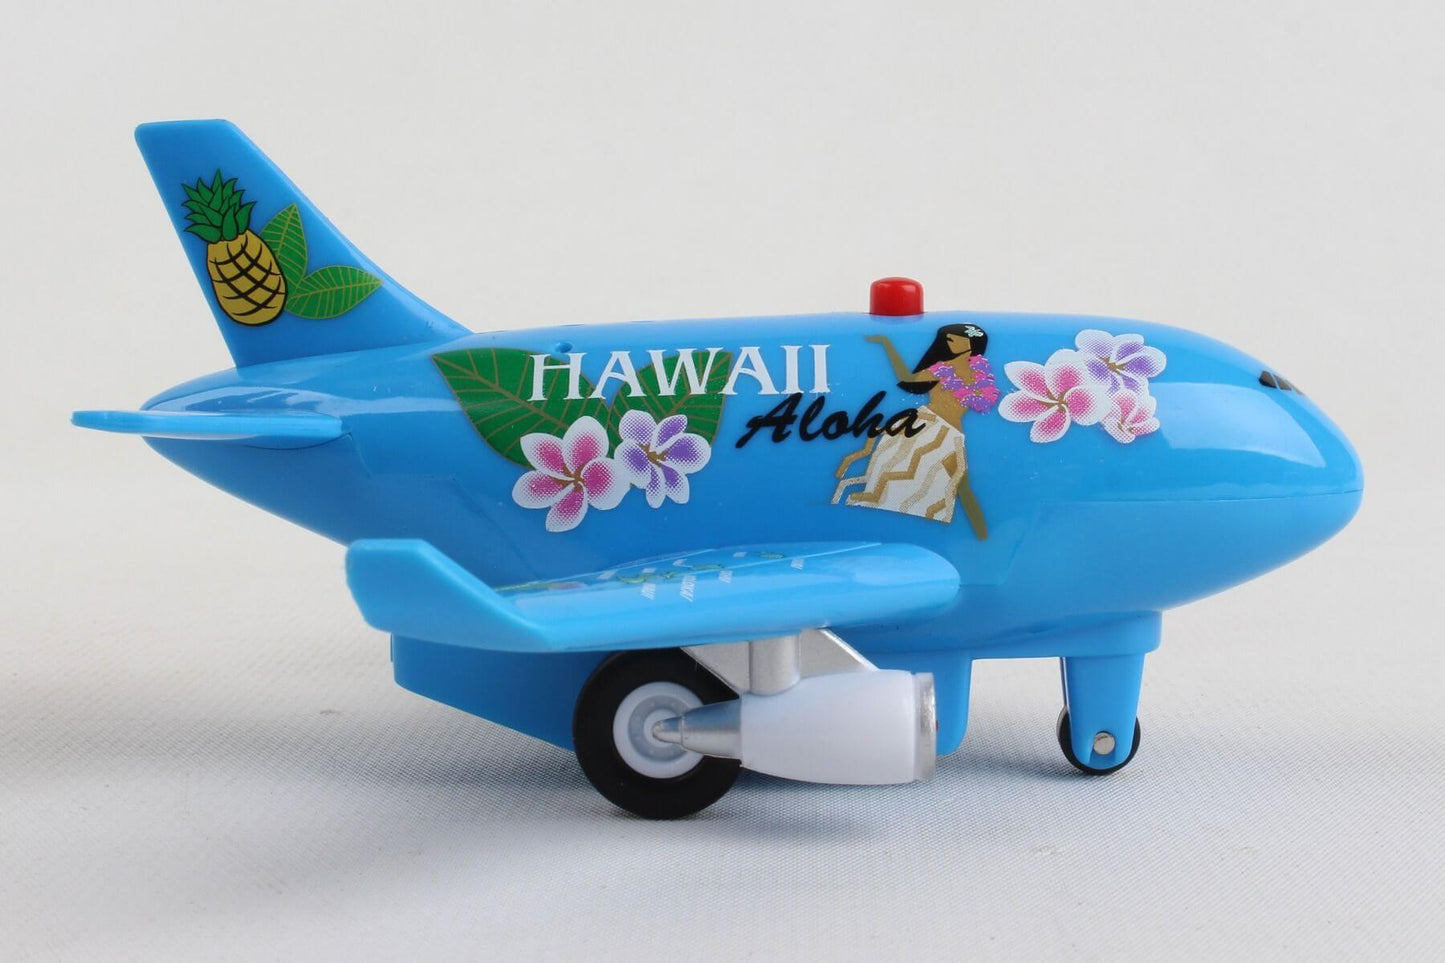 Airplane Hawaii sounds and lights